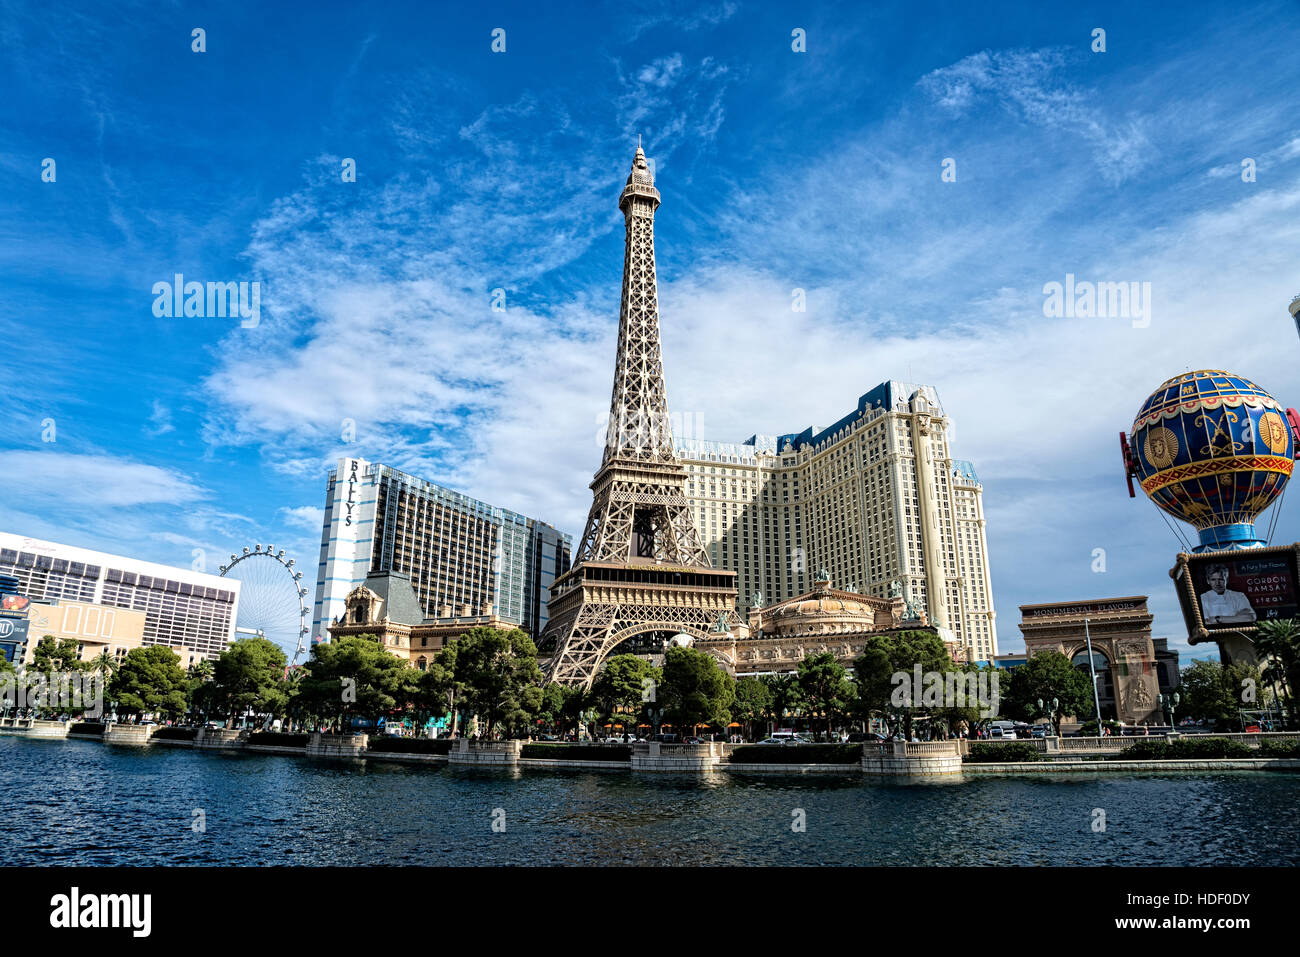 Pics on top of Eiffel Tower Paris Las Vegas : r/LasVegas